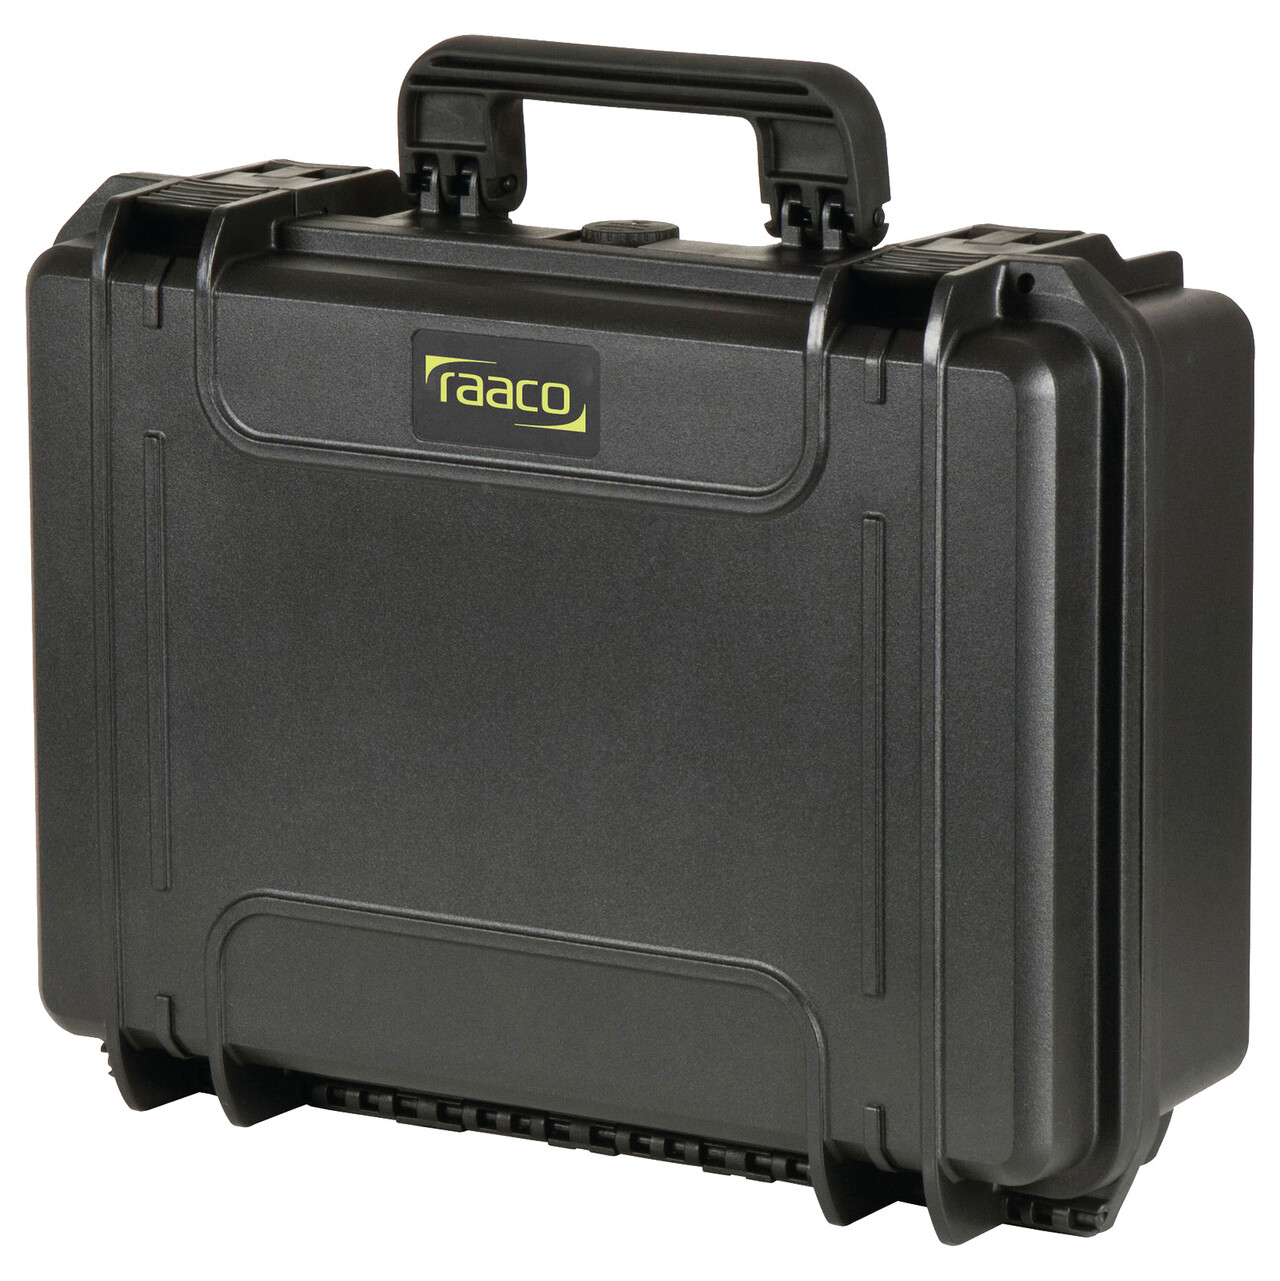 Se Raaco Vand- og støvtætte kuffert 176x366x464Mm hos Specialbutikken